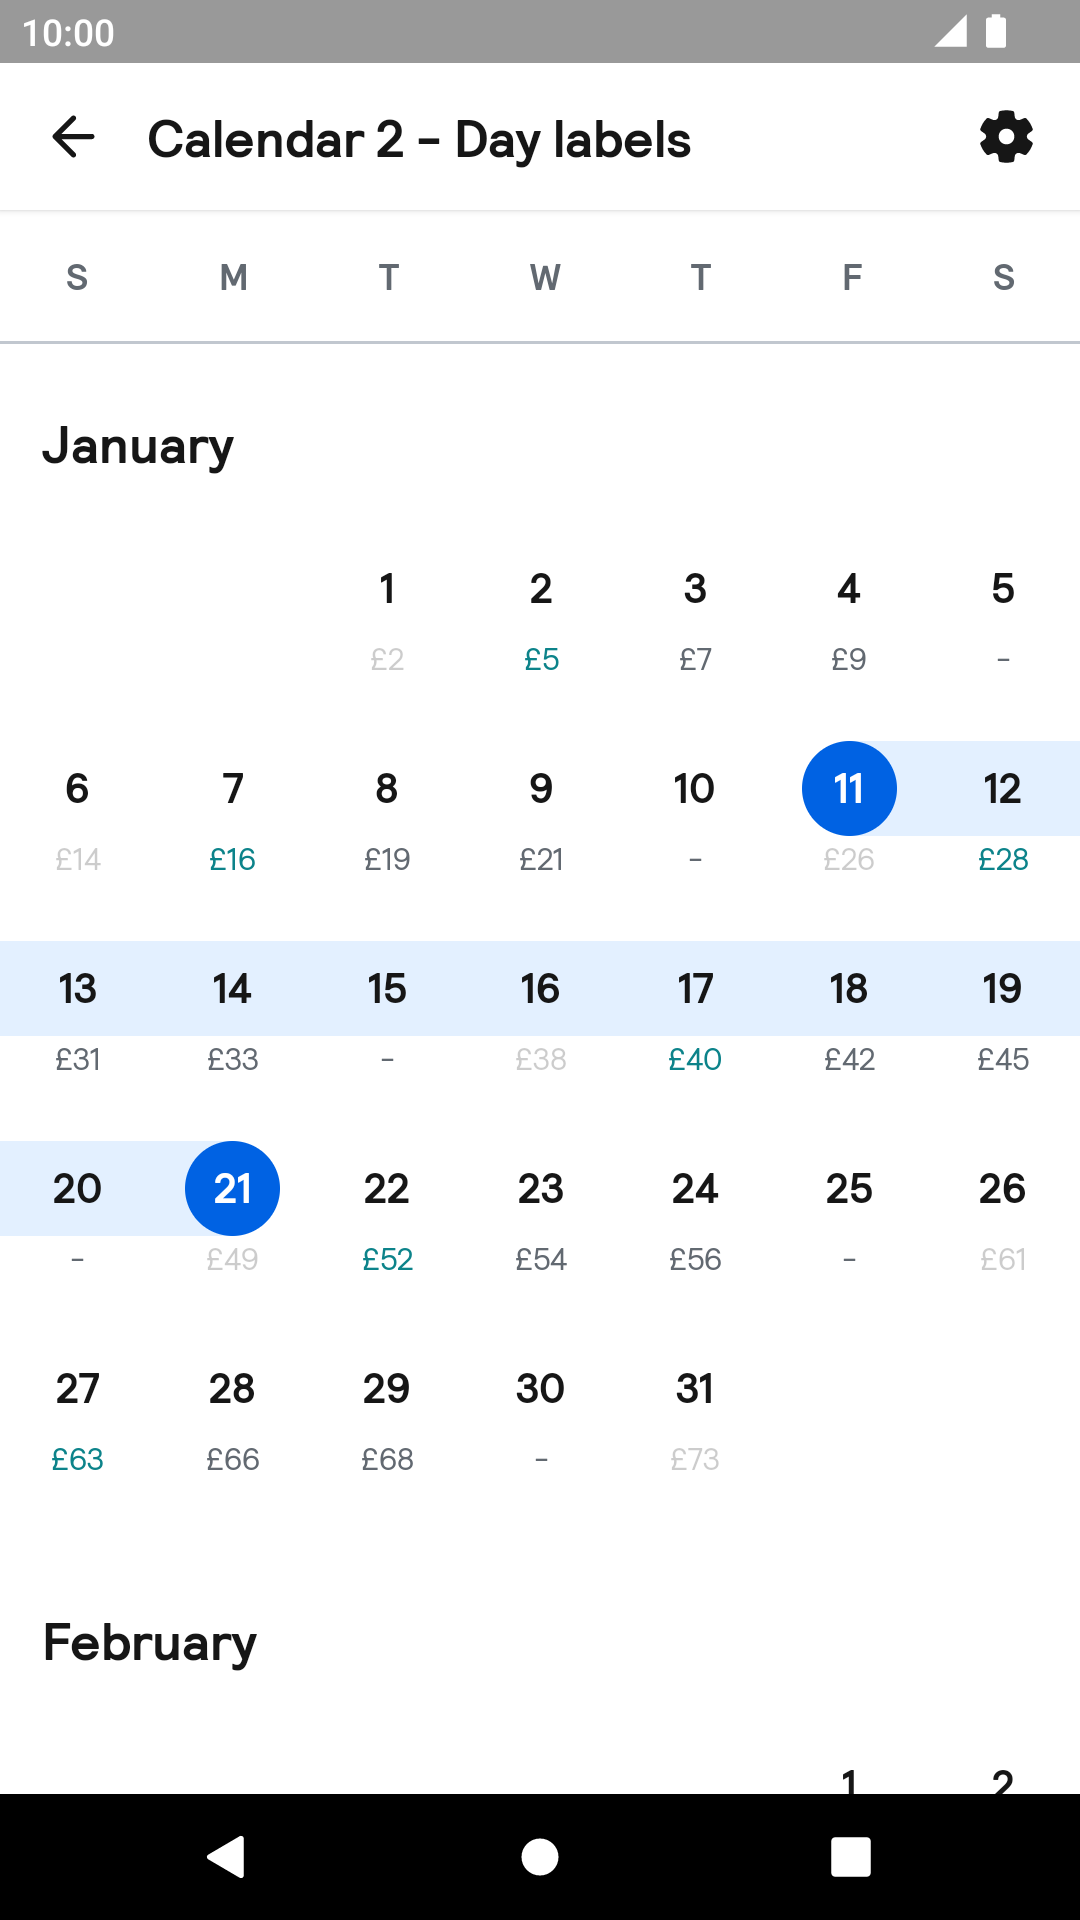 Labeled Calendar2 component